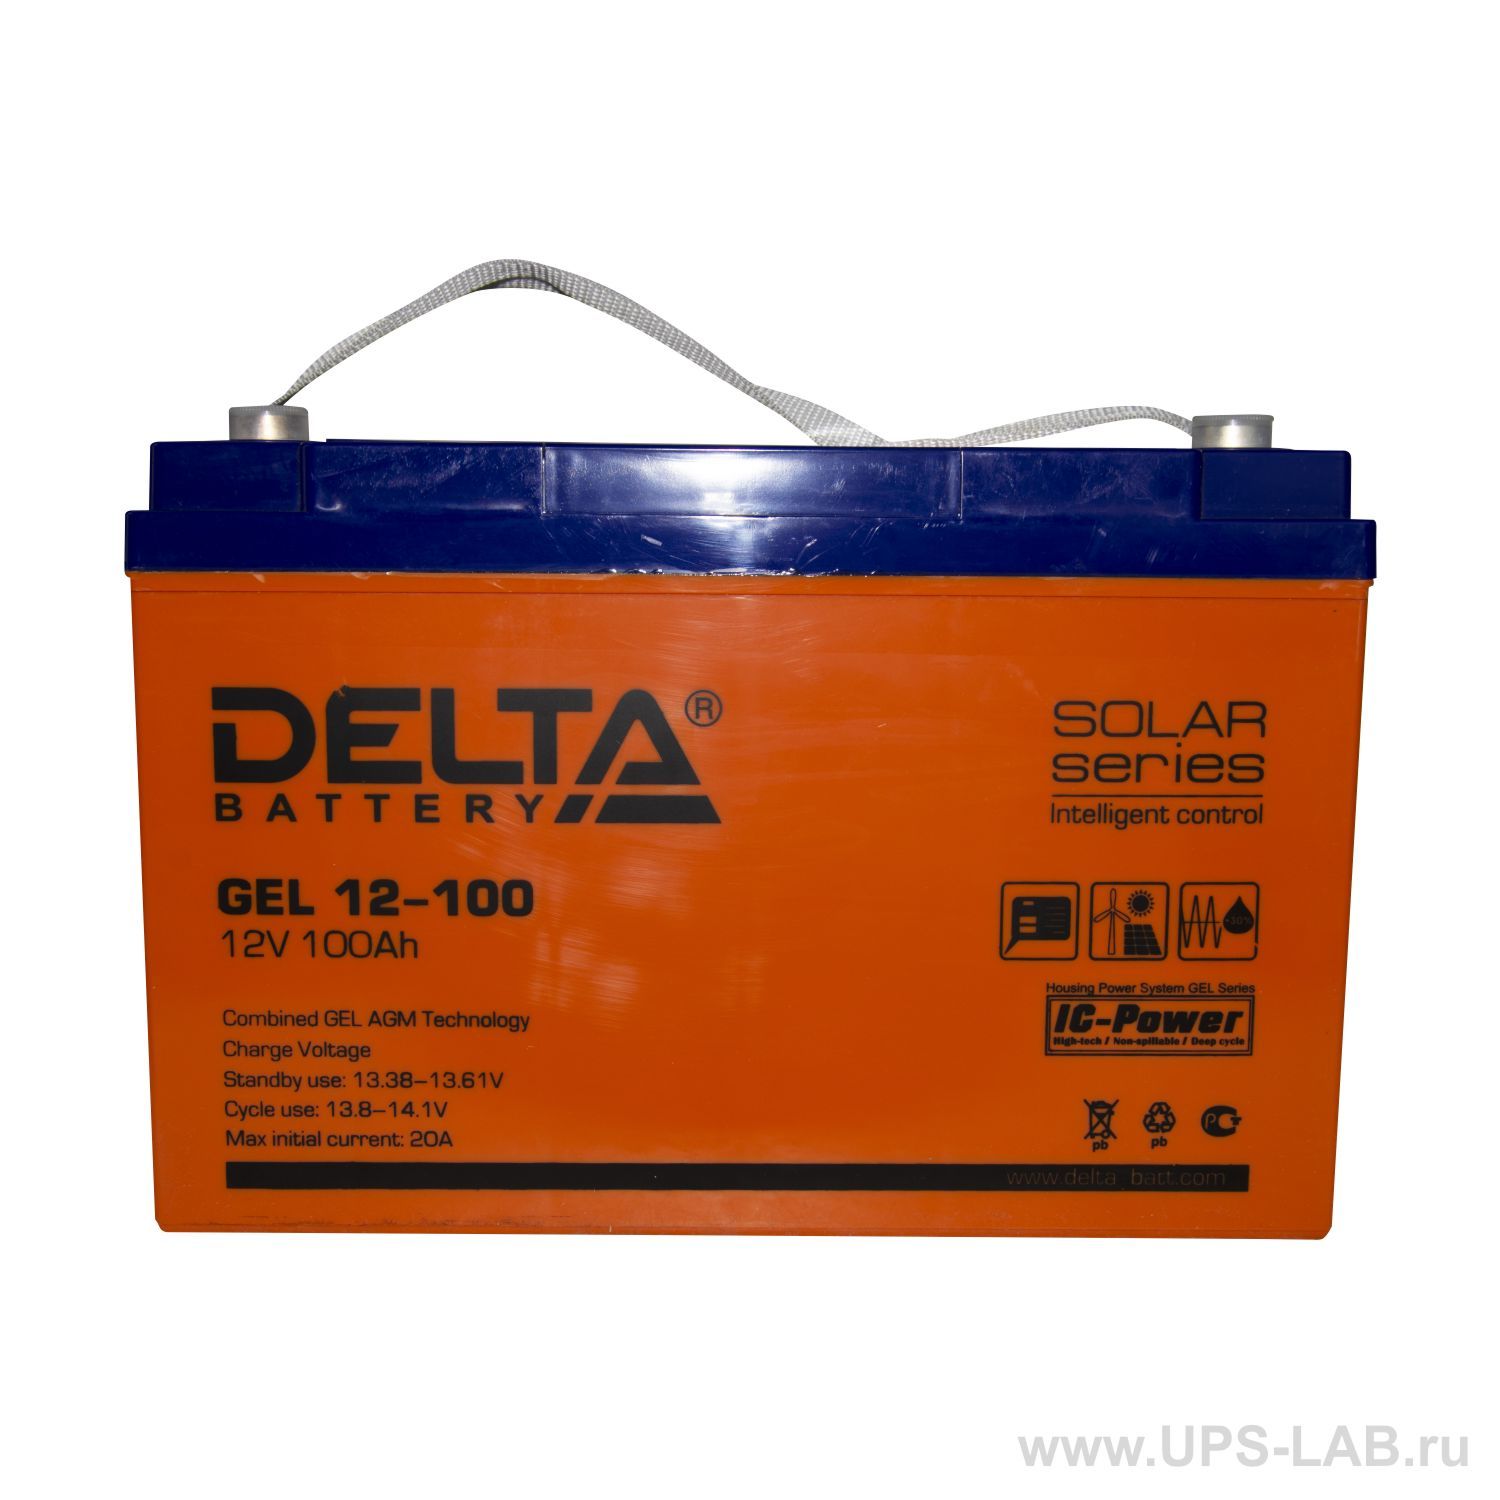 S100 12. Аккумулятор Delta Gel 12-100. Аккумулятор 100ач Delta. Аккумулятор Delta gel12100 12v 100ah (AGM+Gel, ups/Solar Series) (333*173*222mm). Delta Battery Gel 12-100 12в 100 а·ч.